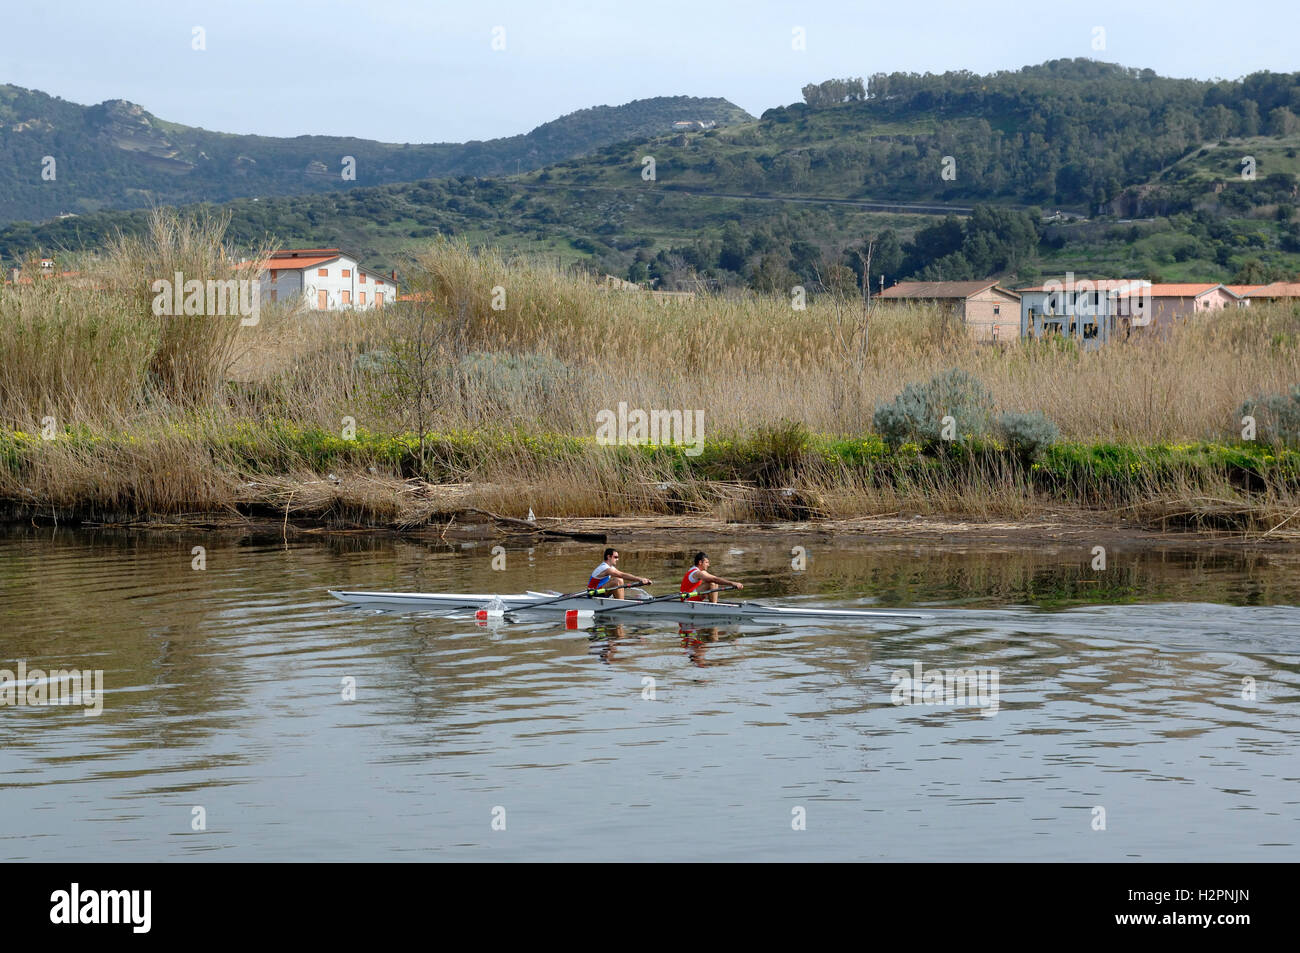 rowing on the river Temo, Bosa, Oristano district, Sardinia, Italy, Europe Stock Photo